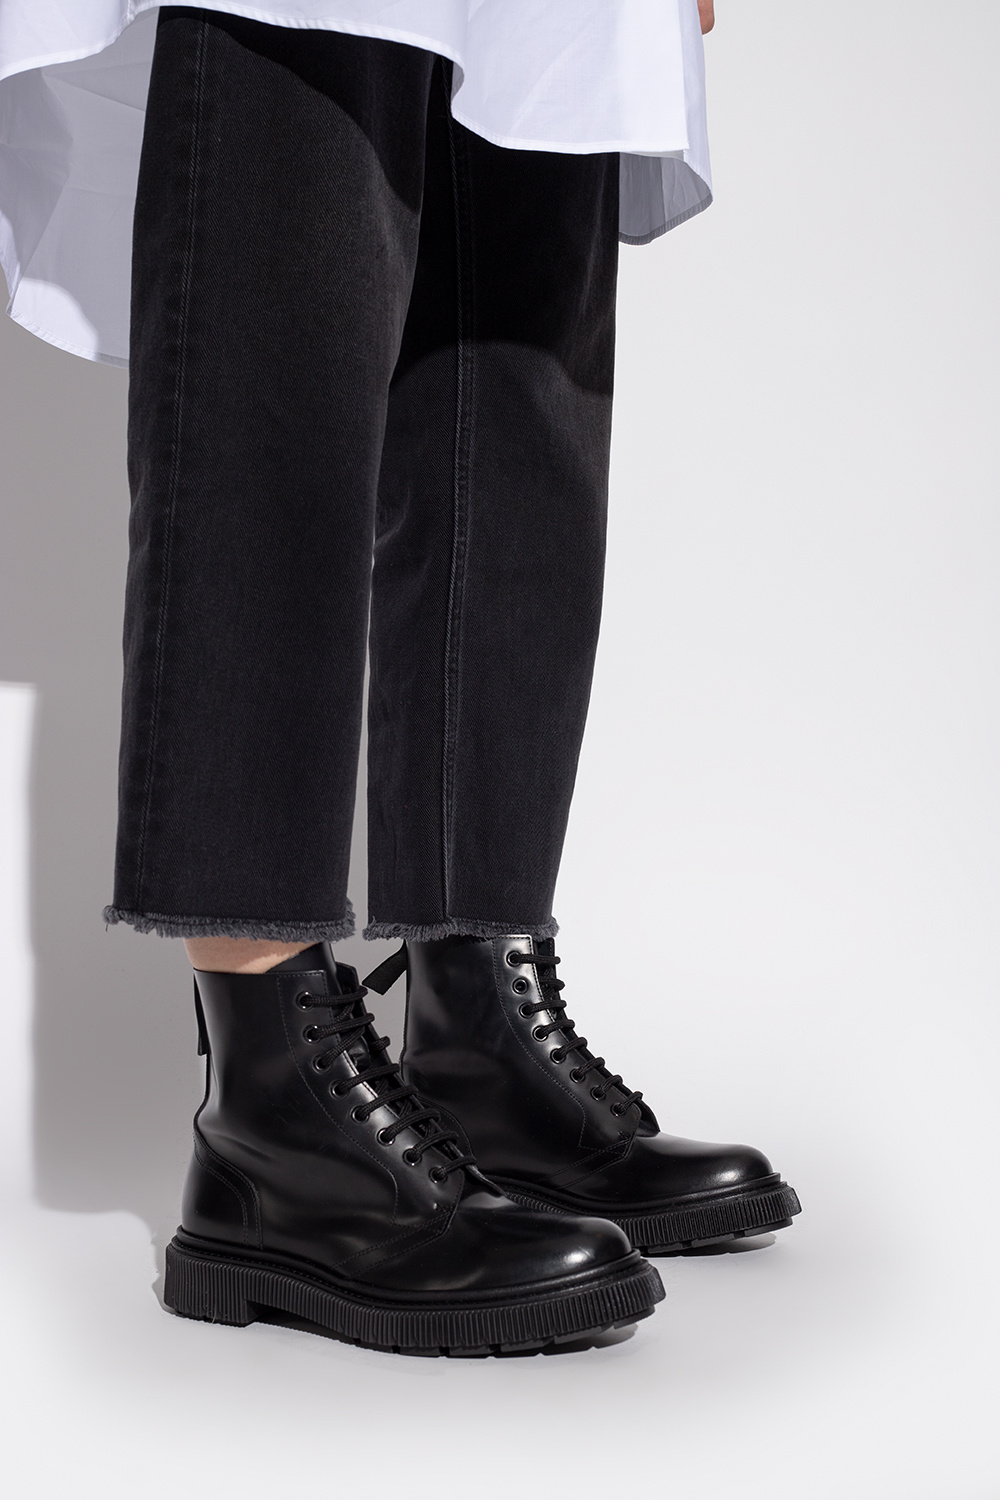 Adieu Paris 'Type 165' boots | Women's Shoes | Vitkac